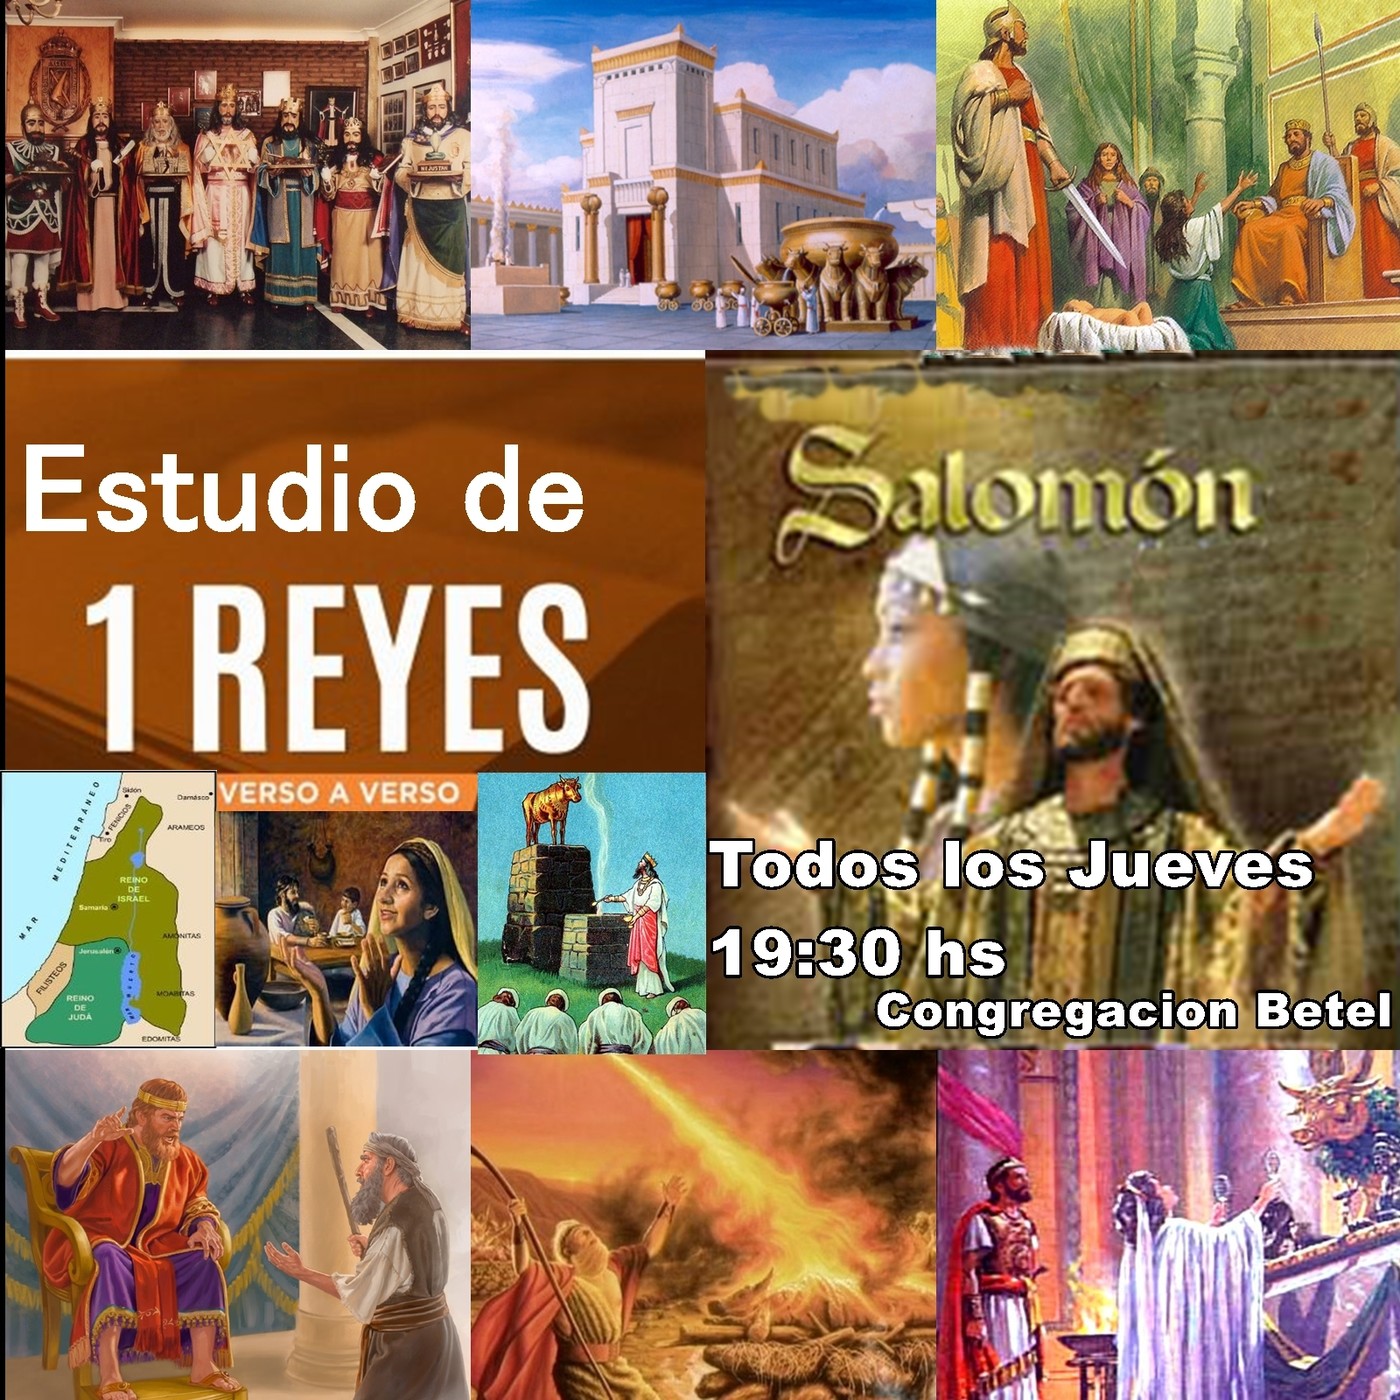 1 Reyes - A través de la Biblia (podcast) - Calvary Antigua